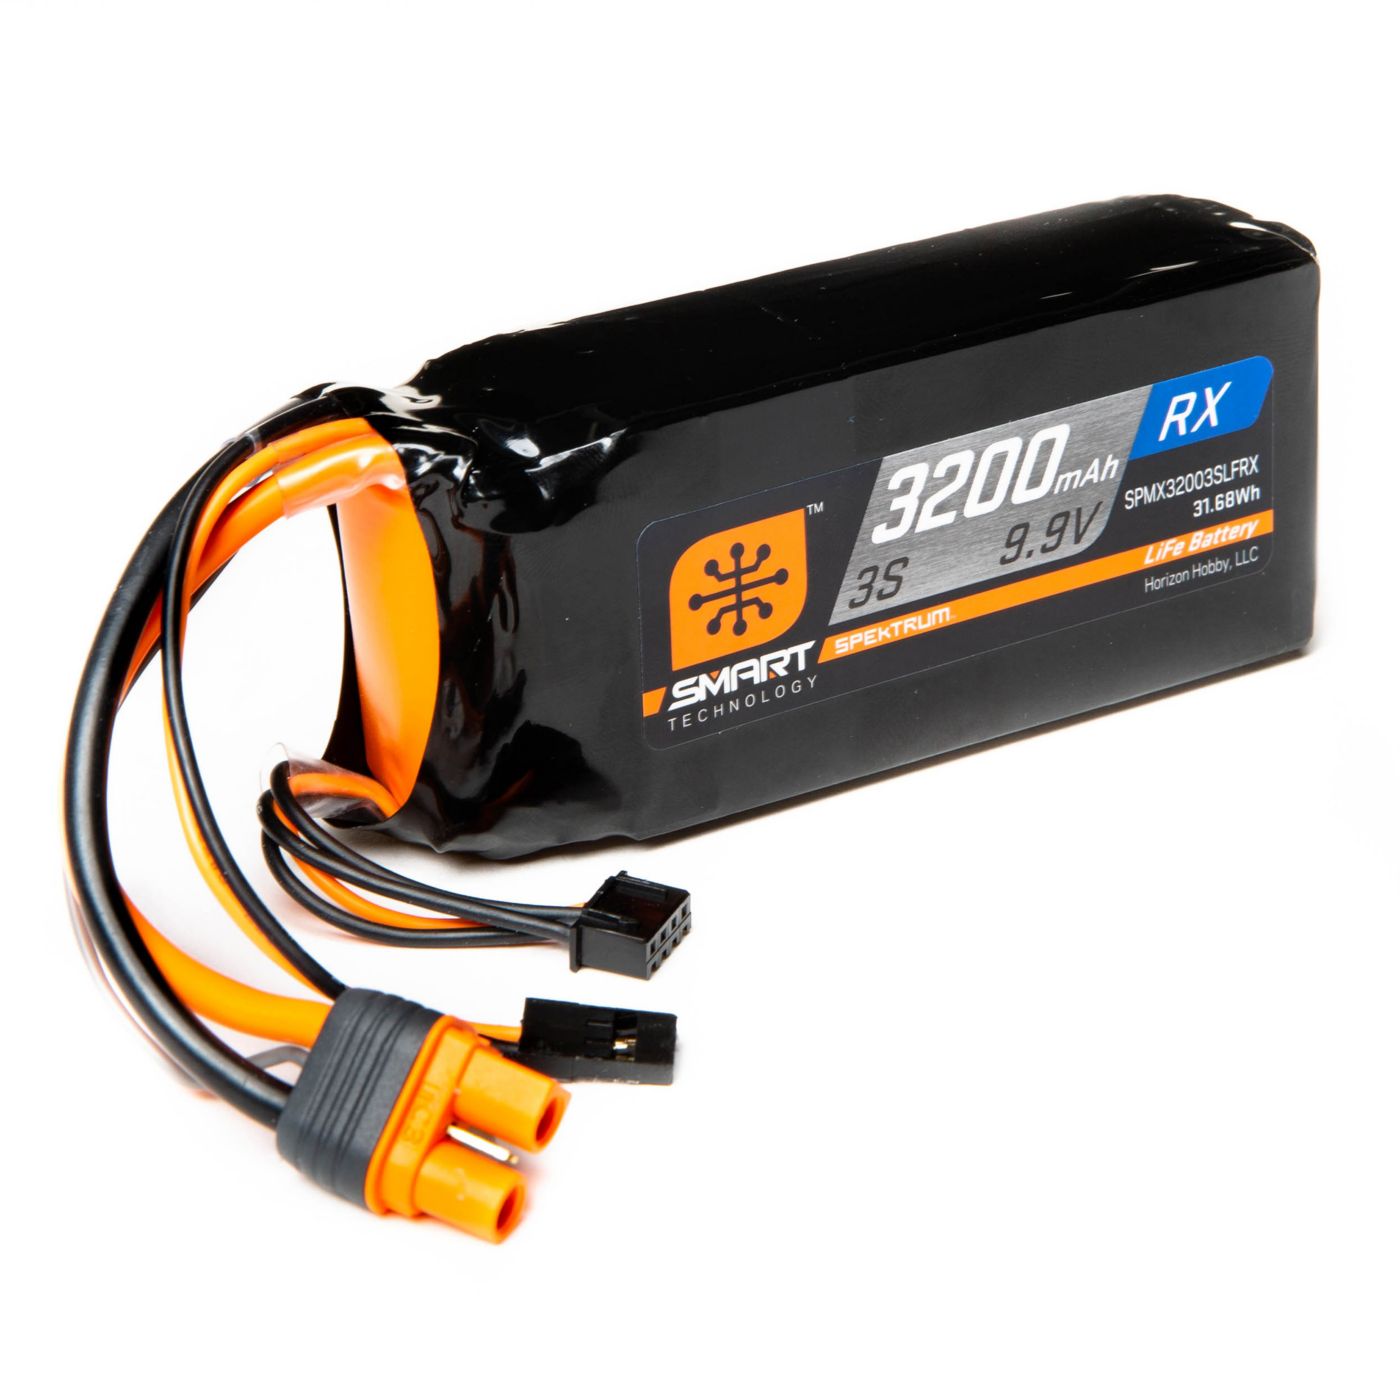 Spektrum 3200mAh 3S 9.9V Smart LiFe ECU Battery IC3 SPMX32003SLFRX